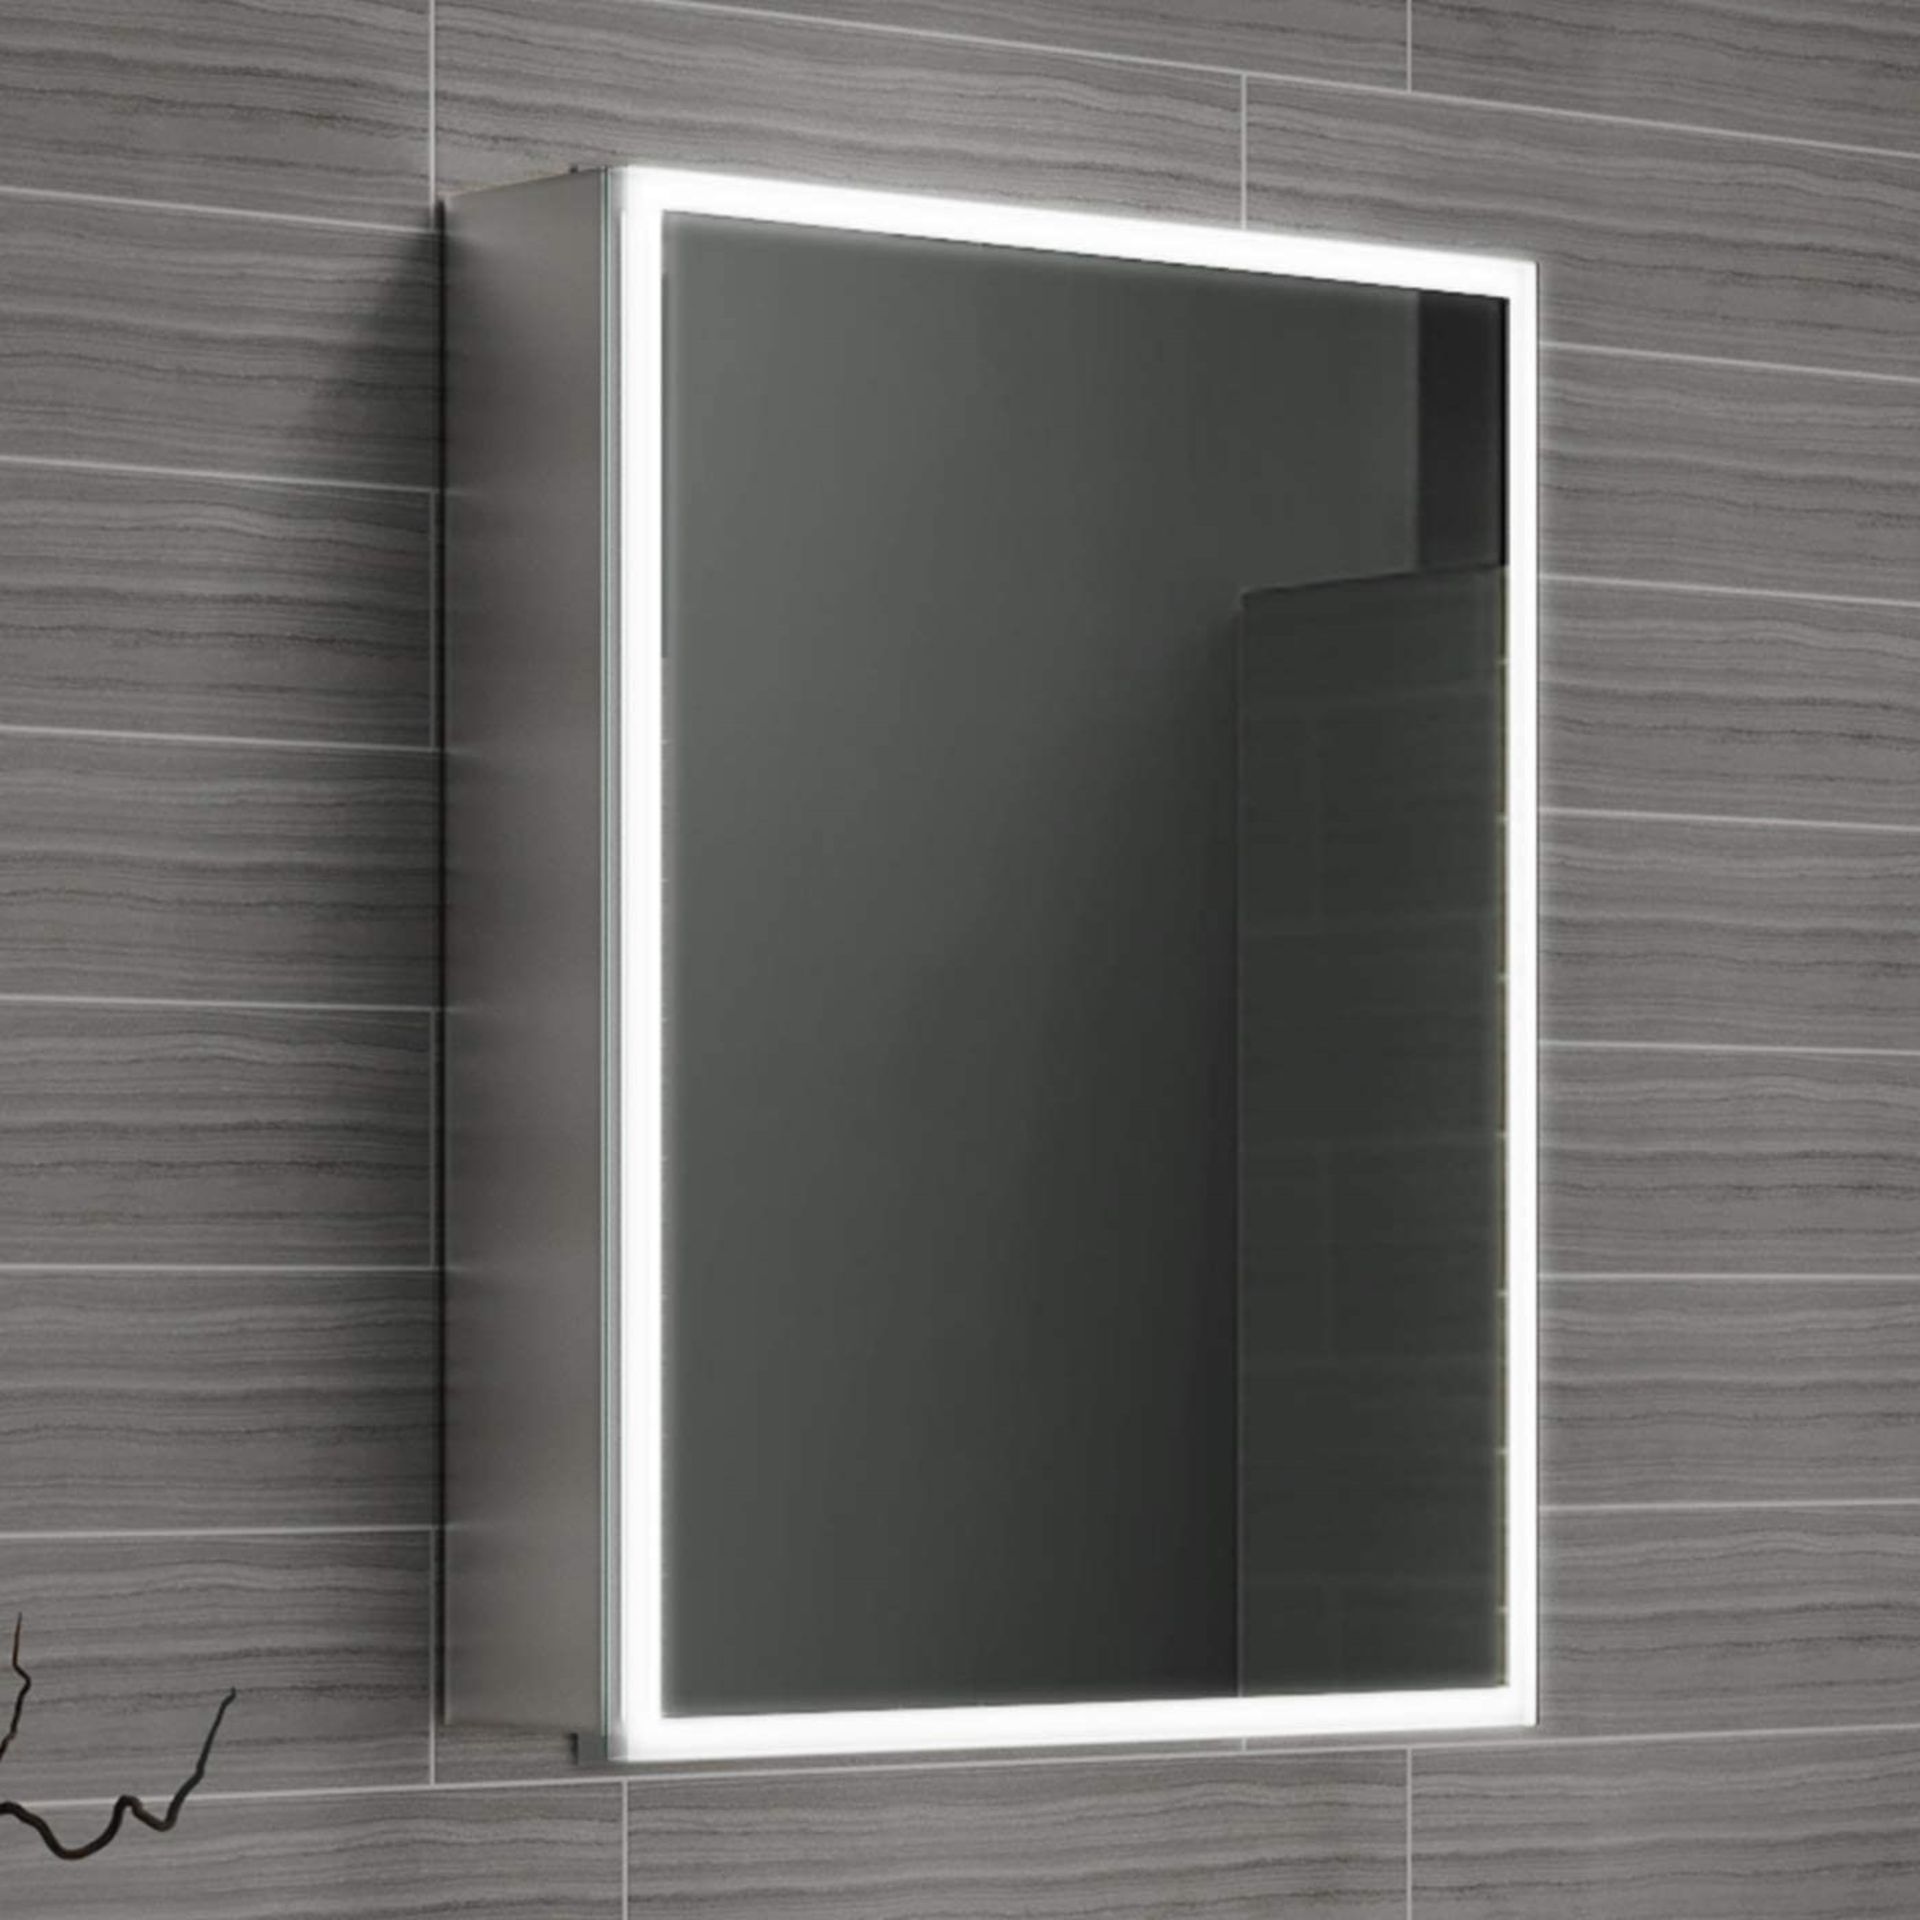 New 450x600 Cosmic Illuminated Led Mirror Cabinet. RRP £499.99. Mc161. We Love This Mirror ...